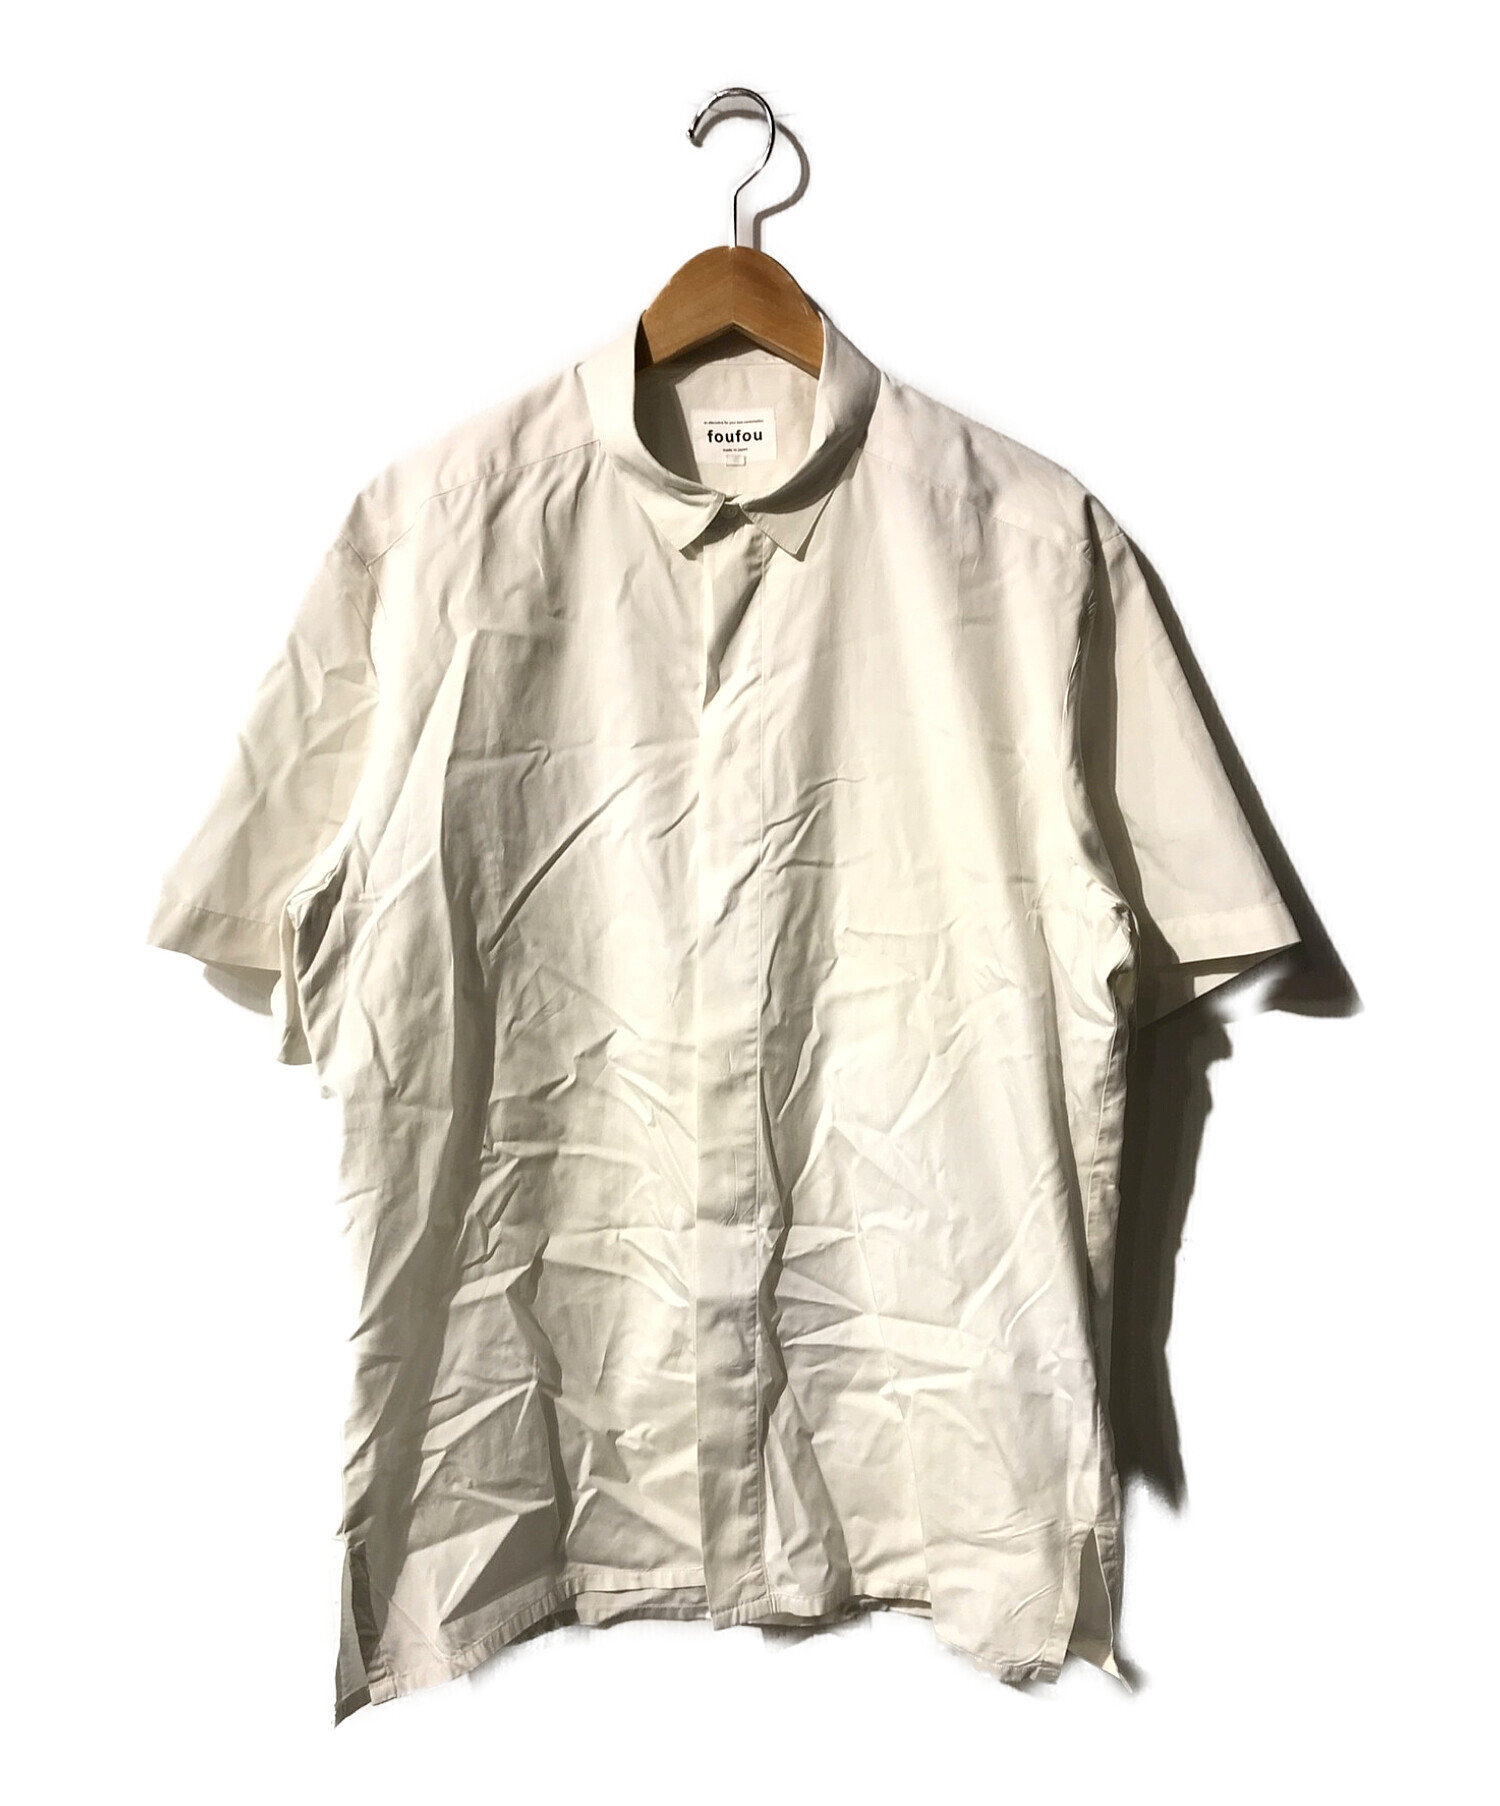 fou fou (フーフー) 軽井沢の夏半袖シャツ ホワイト サイズ:2